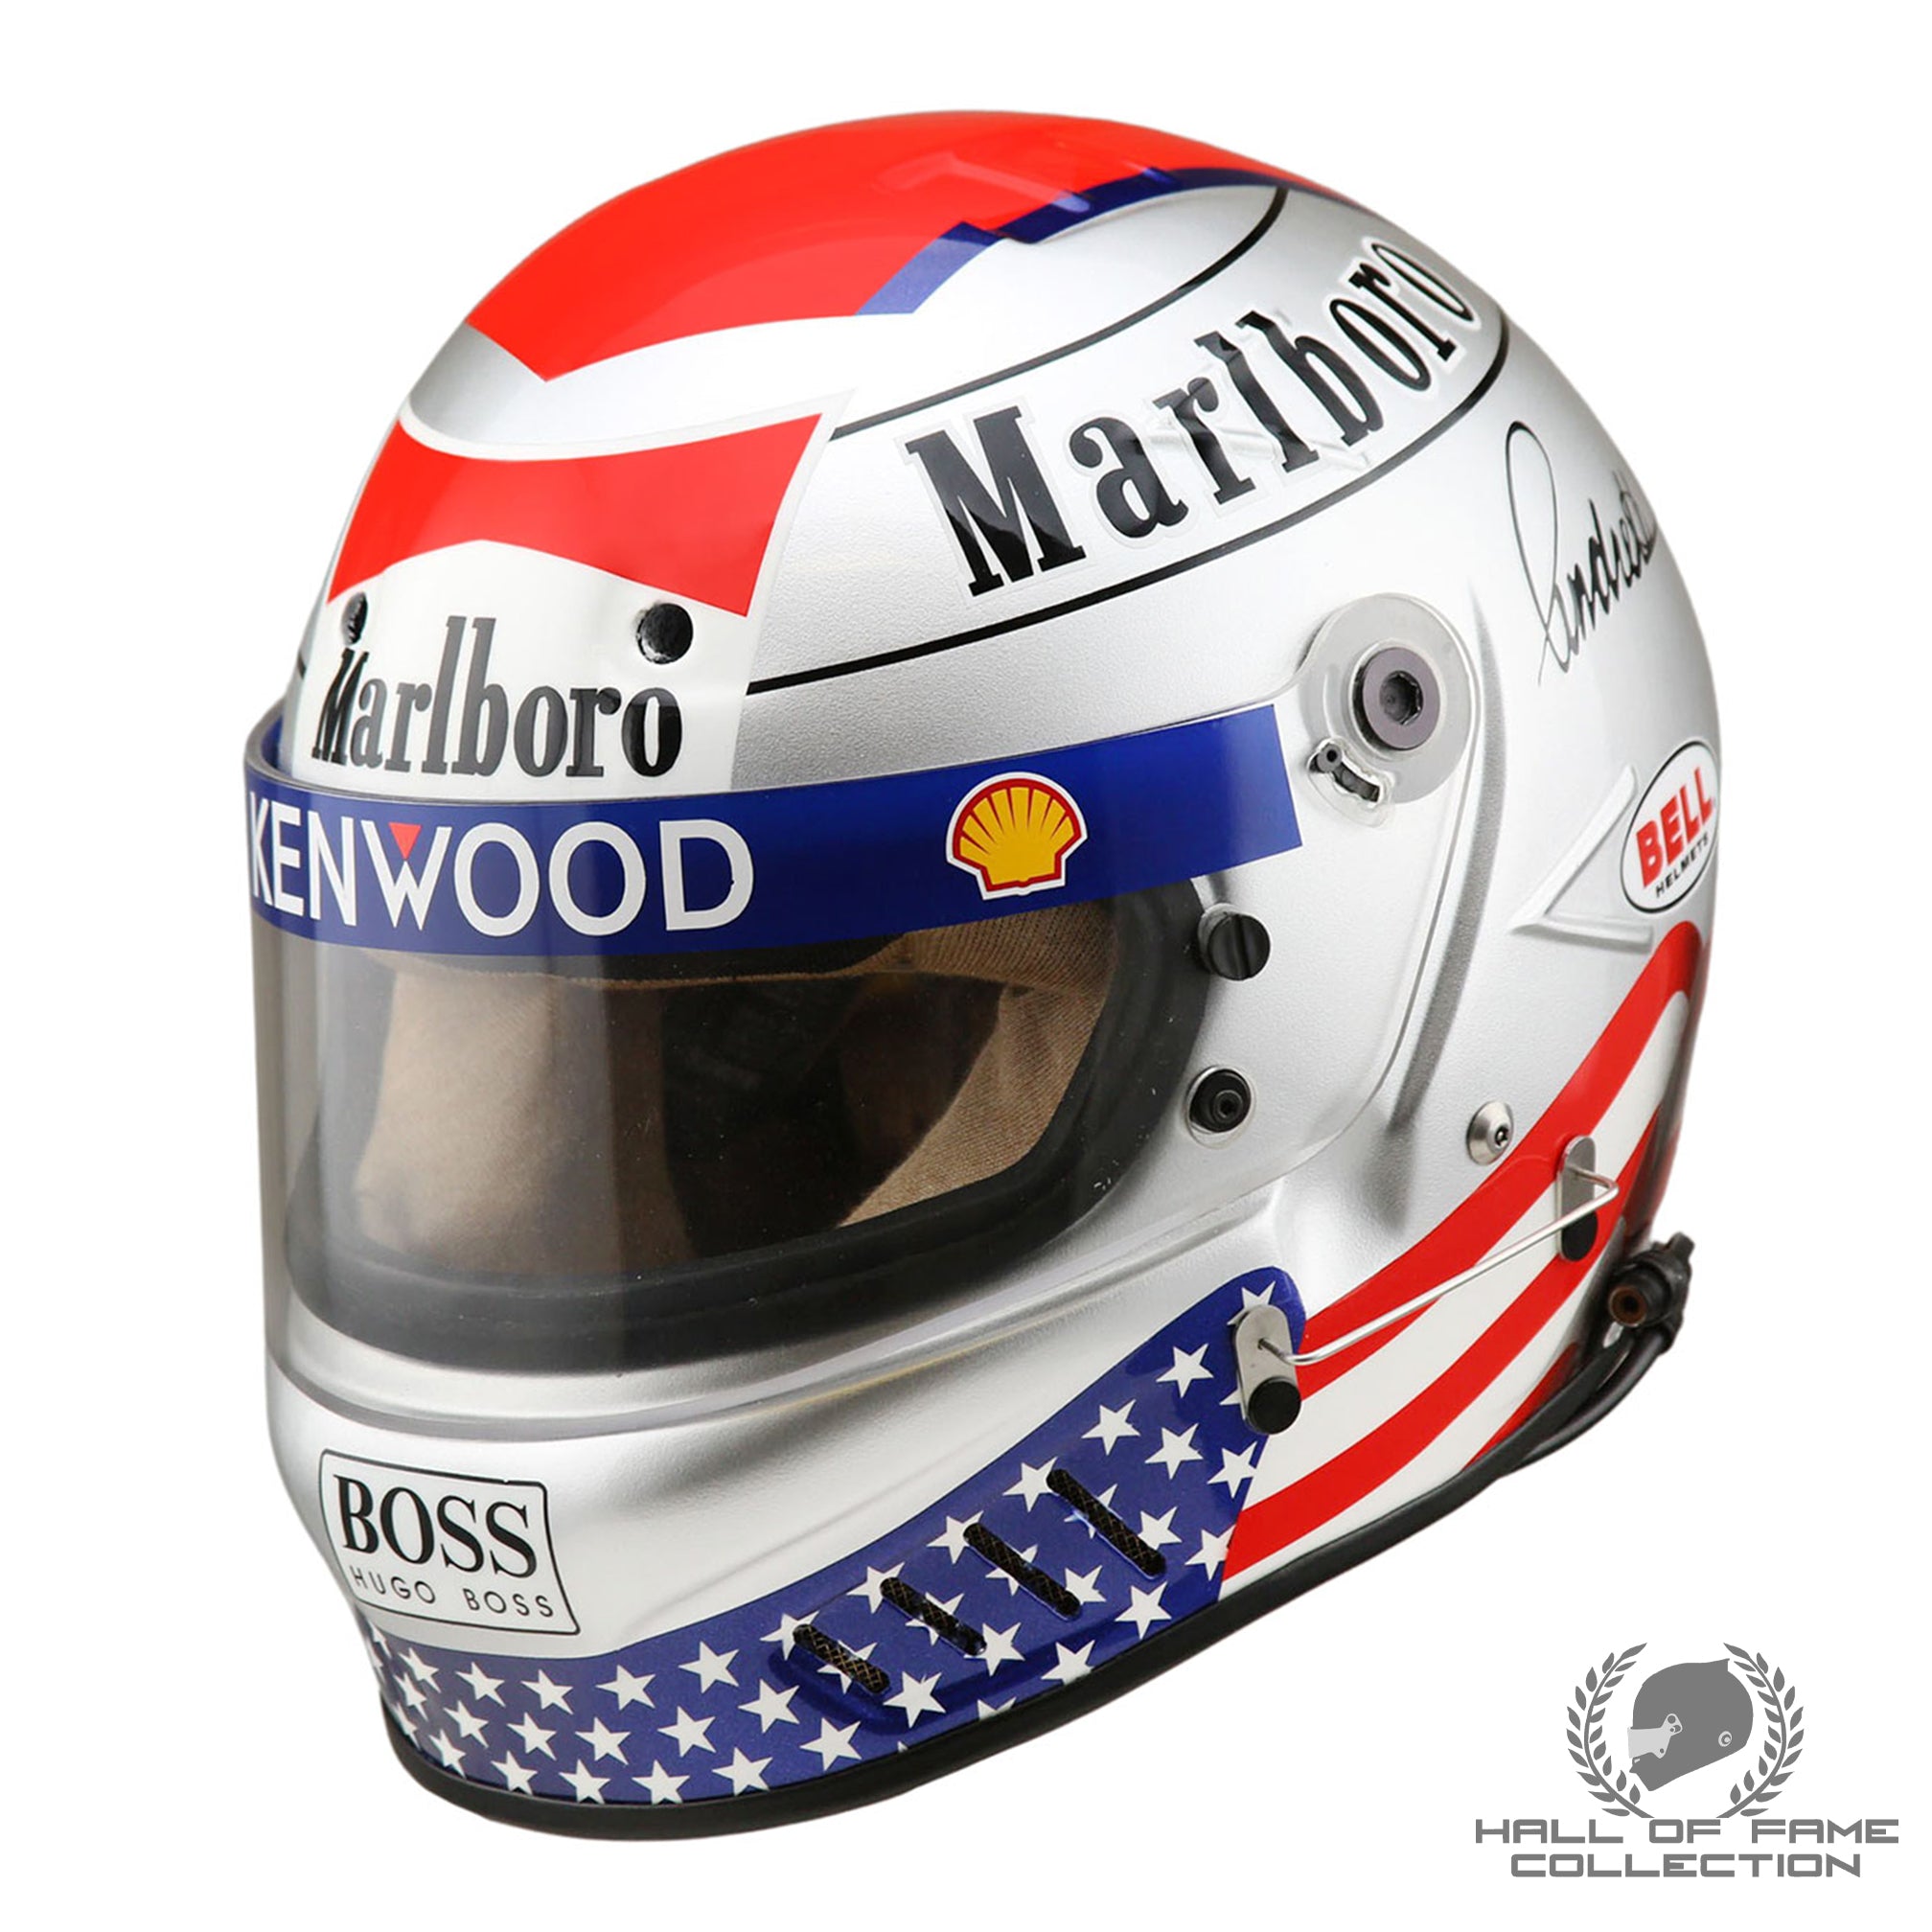 1993 Michael Andretti Replica Bell Marlboro McLaren F1 Helmet